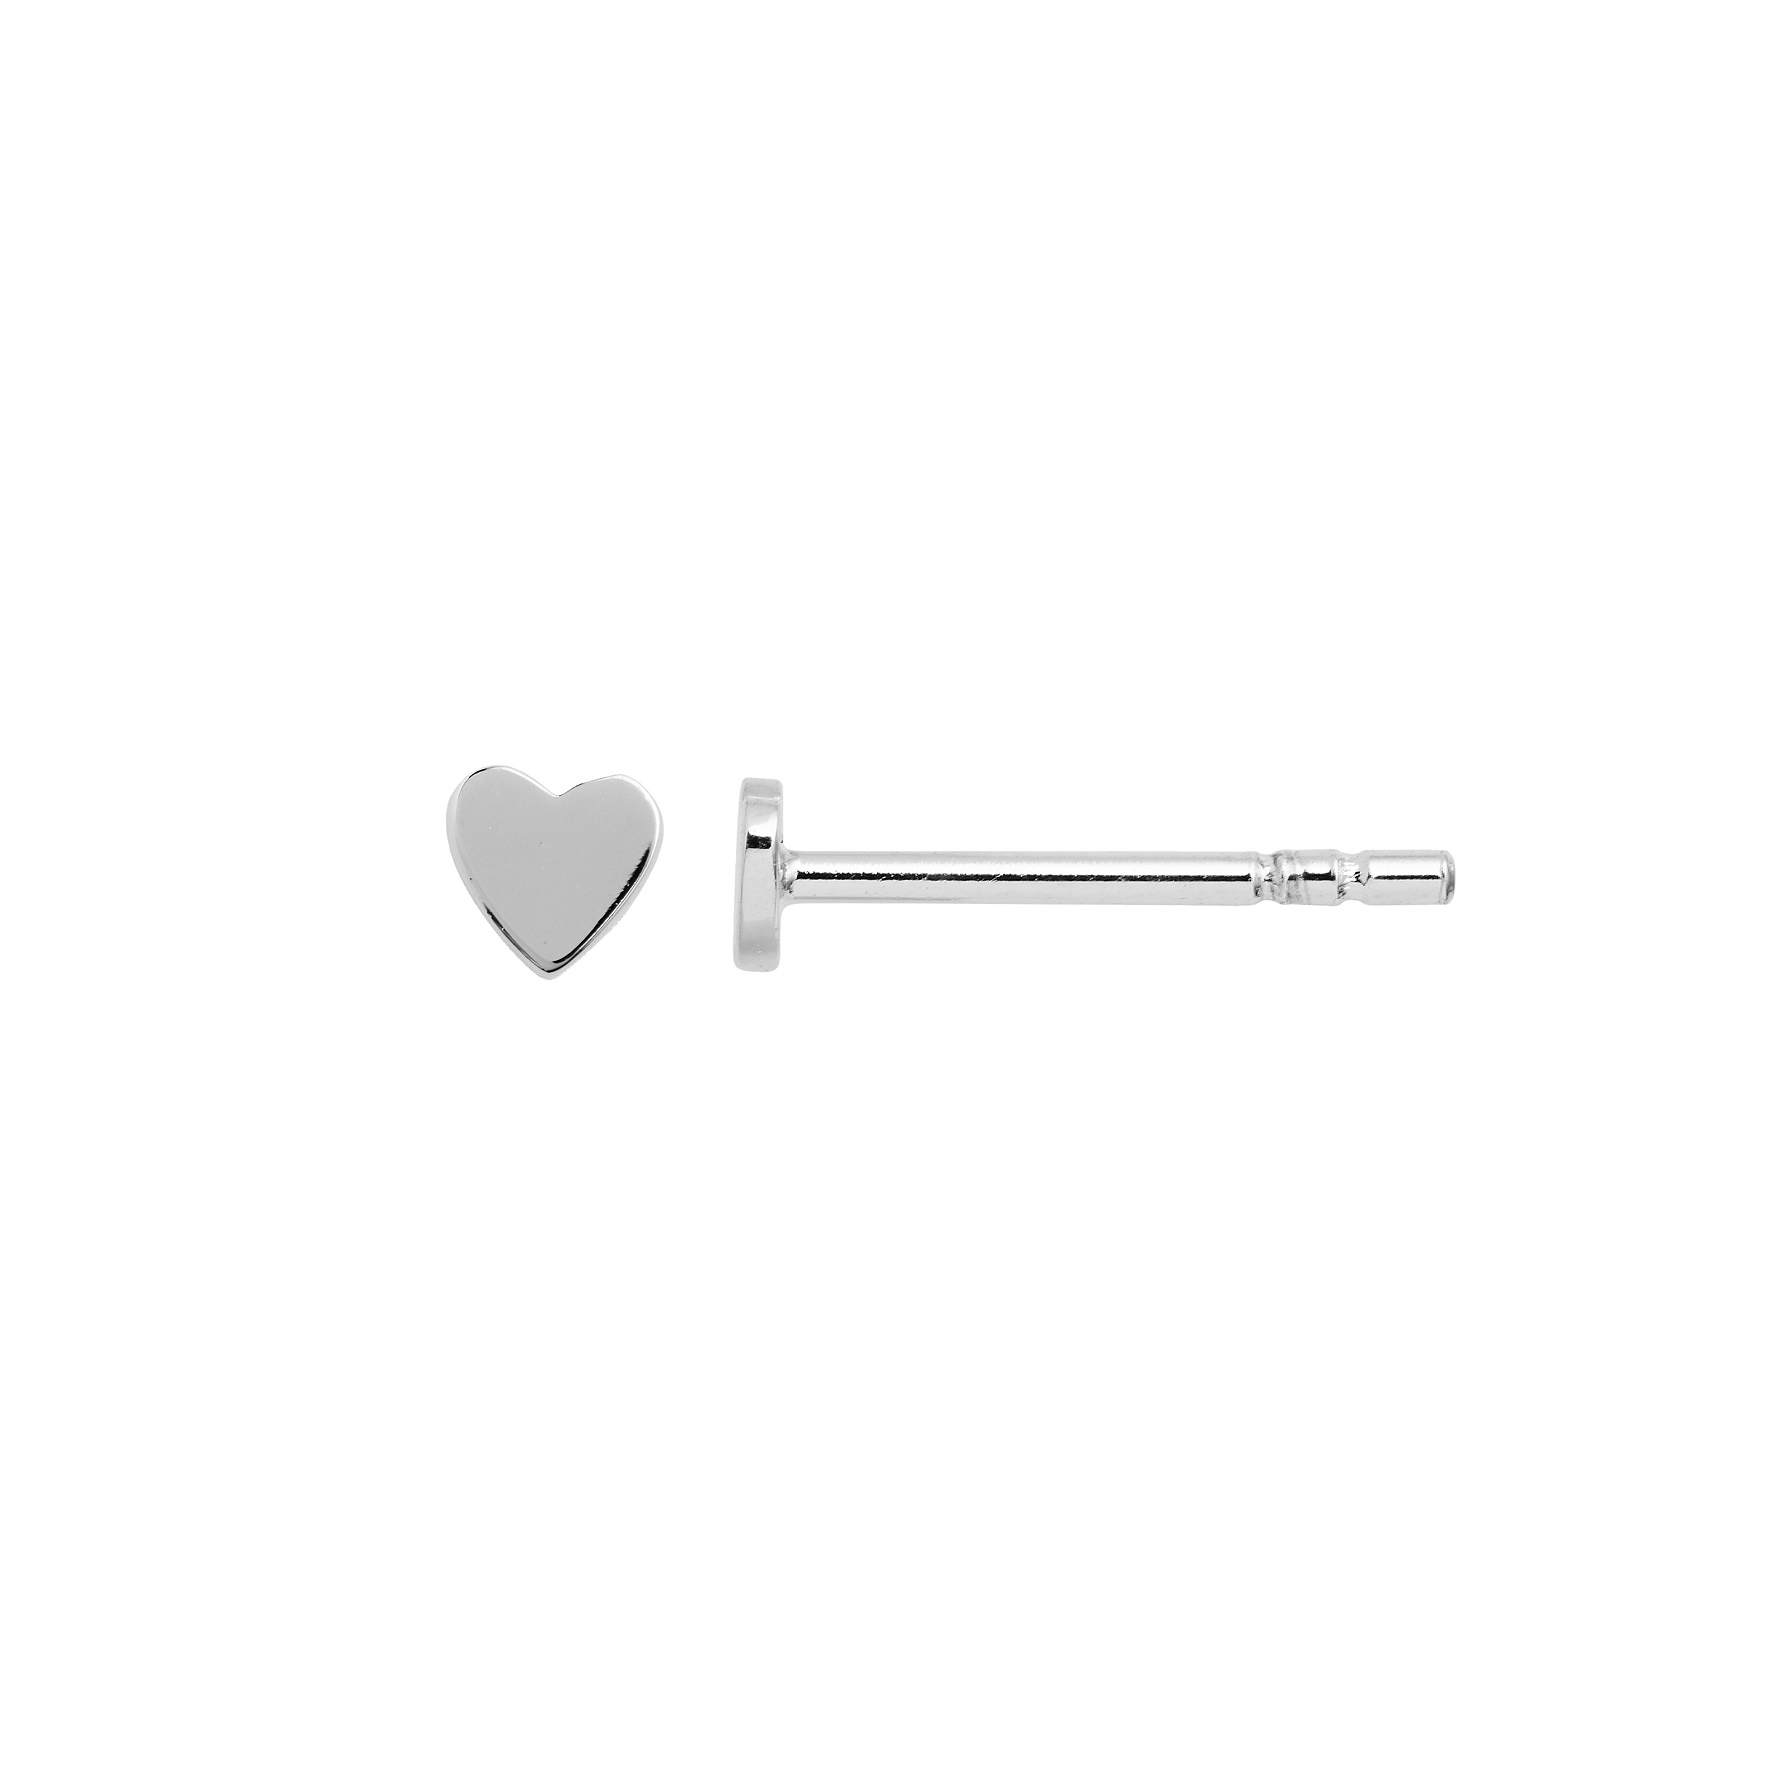 Petit Love Heart Earring fra STINE A Jewelry i Sølv Sterling 925